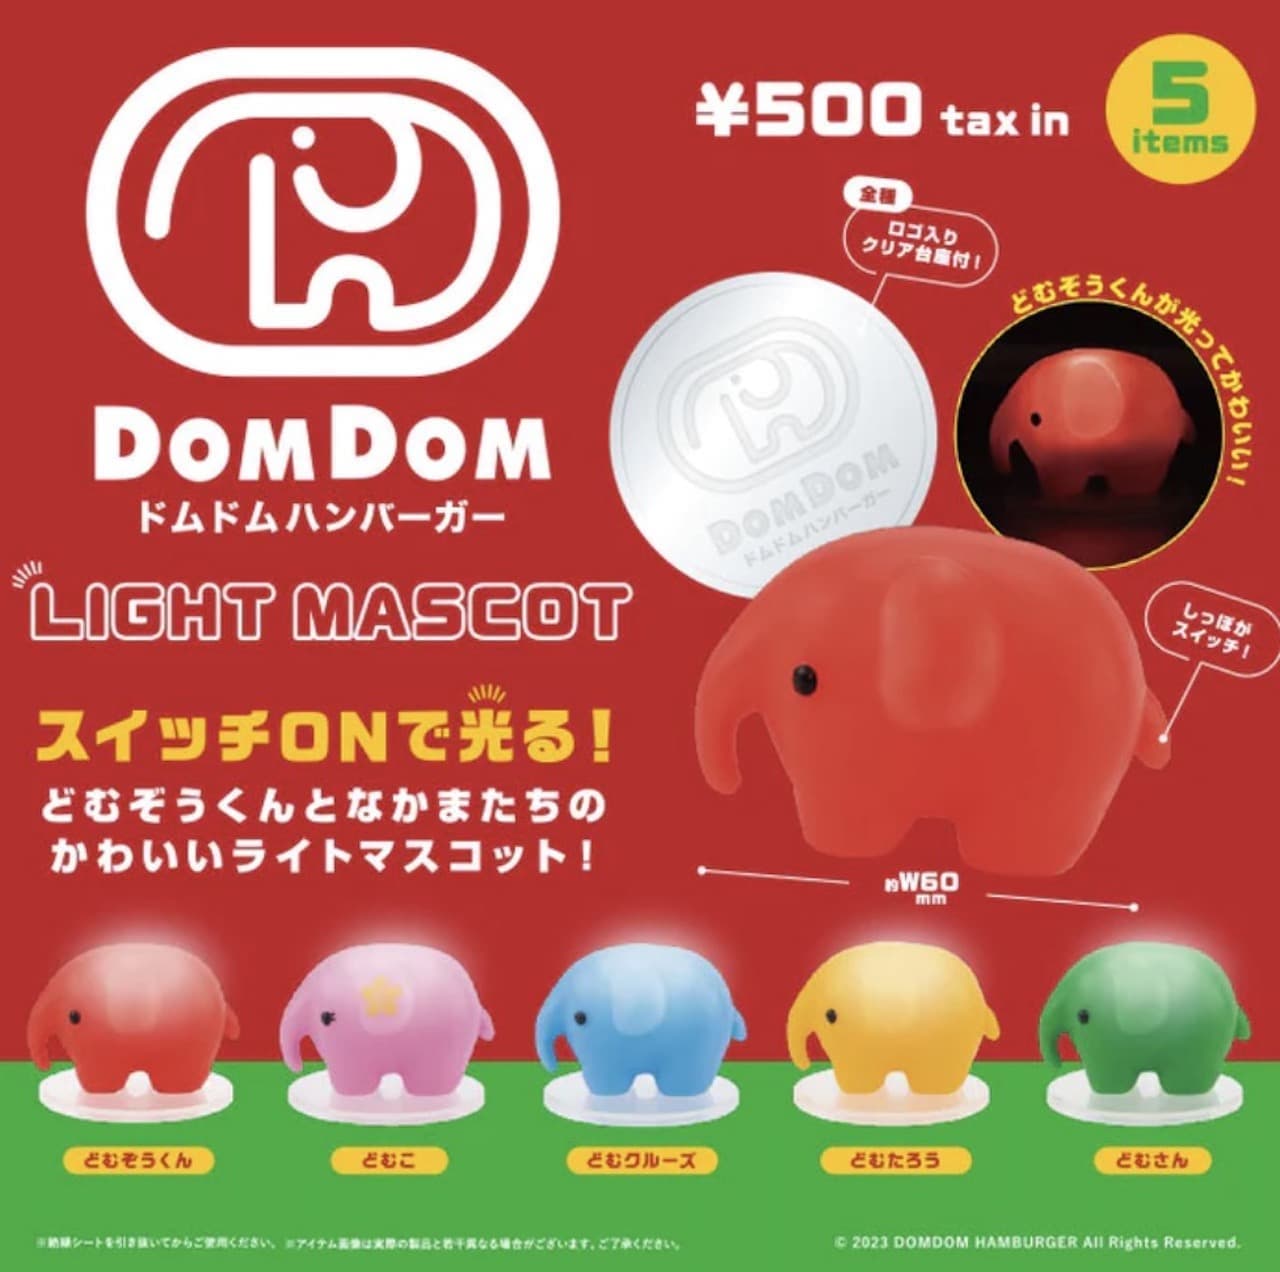 Dom Dom Hamburger Light Mascot" from Ken Elephant